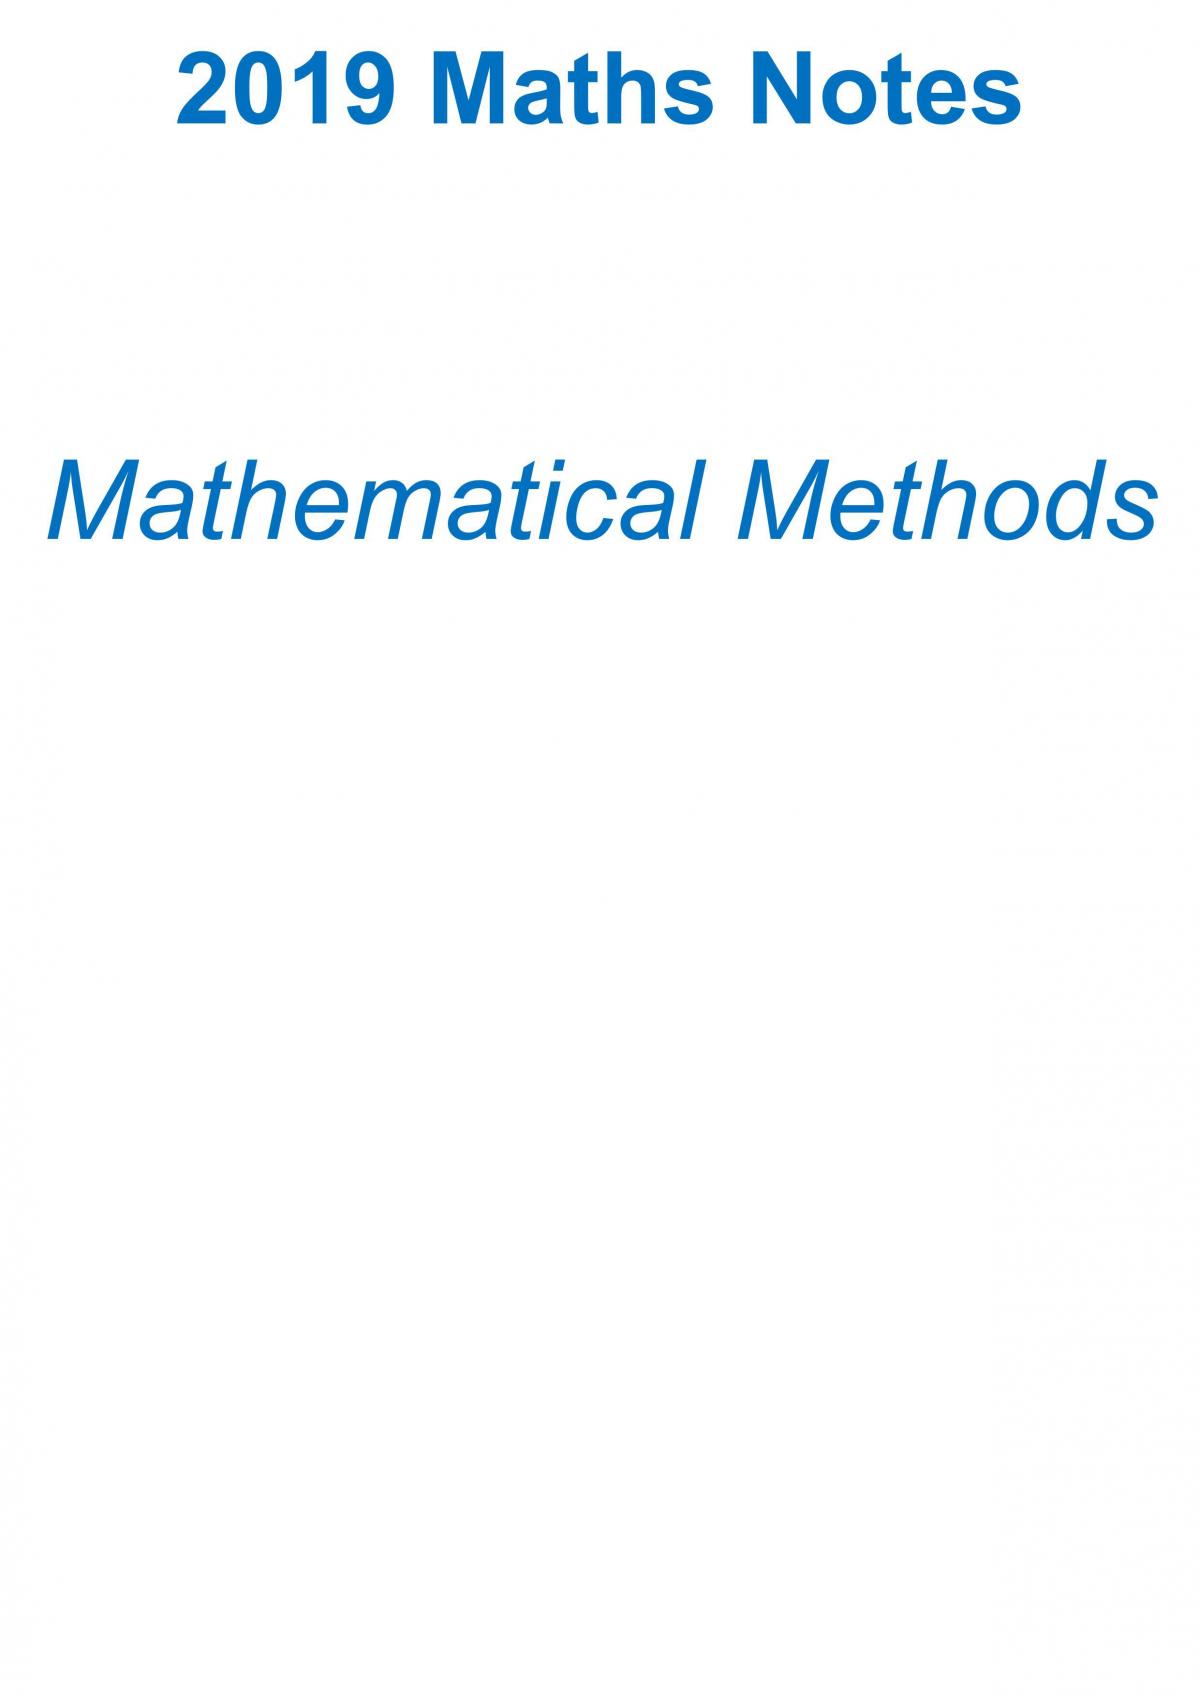 Mathematical Method thorough summary - Page 1